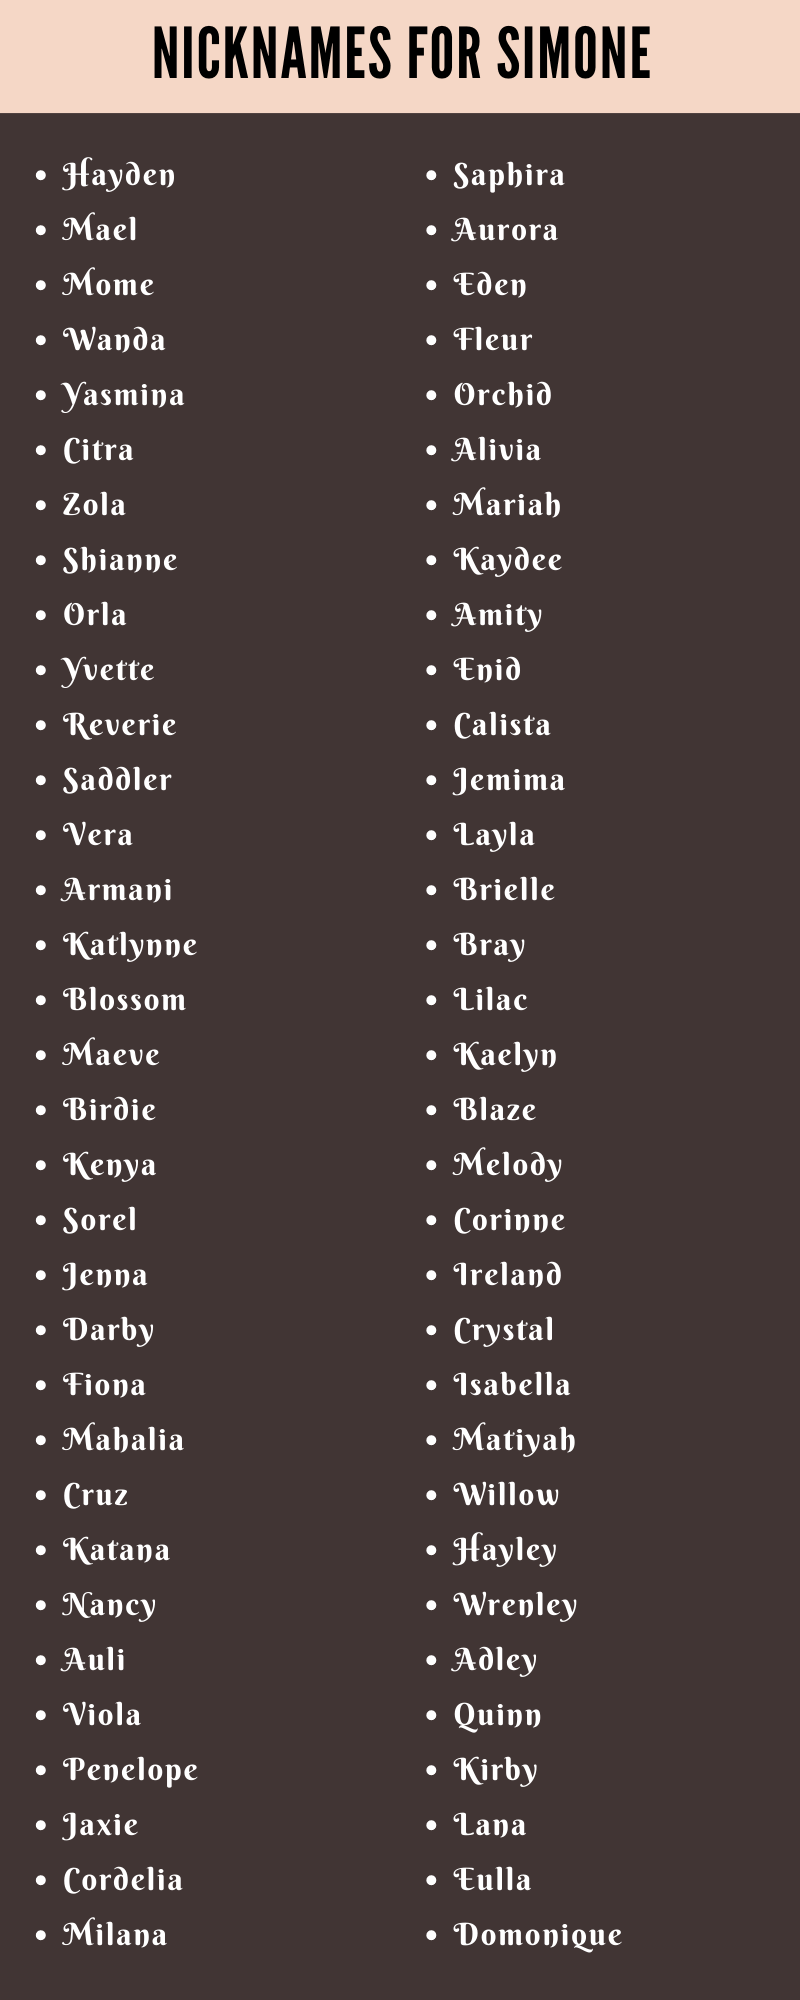 Nicknames For Simone: 200 Adorable and Cute Names